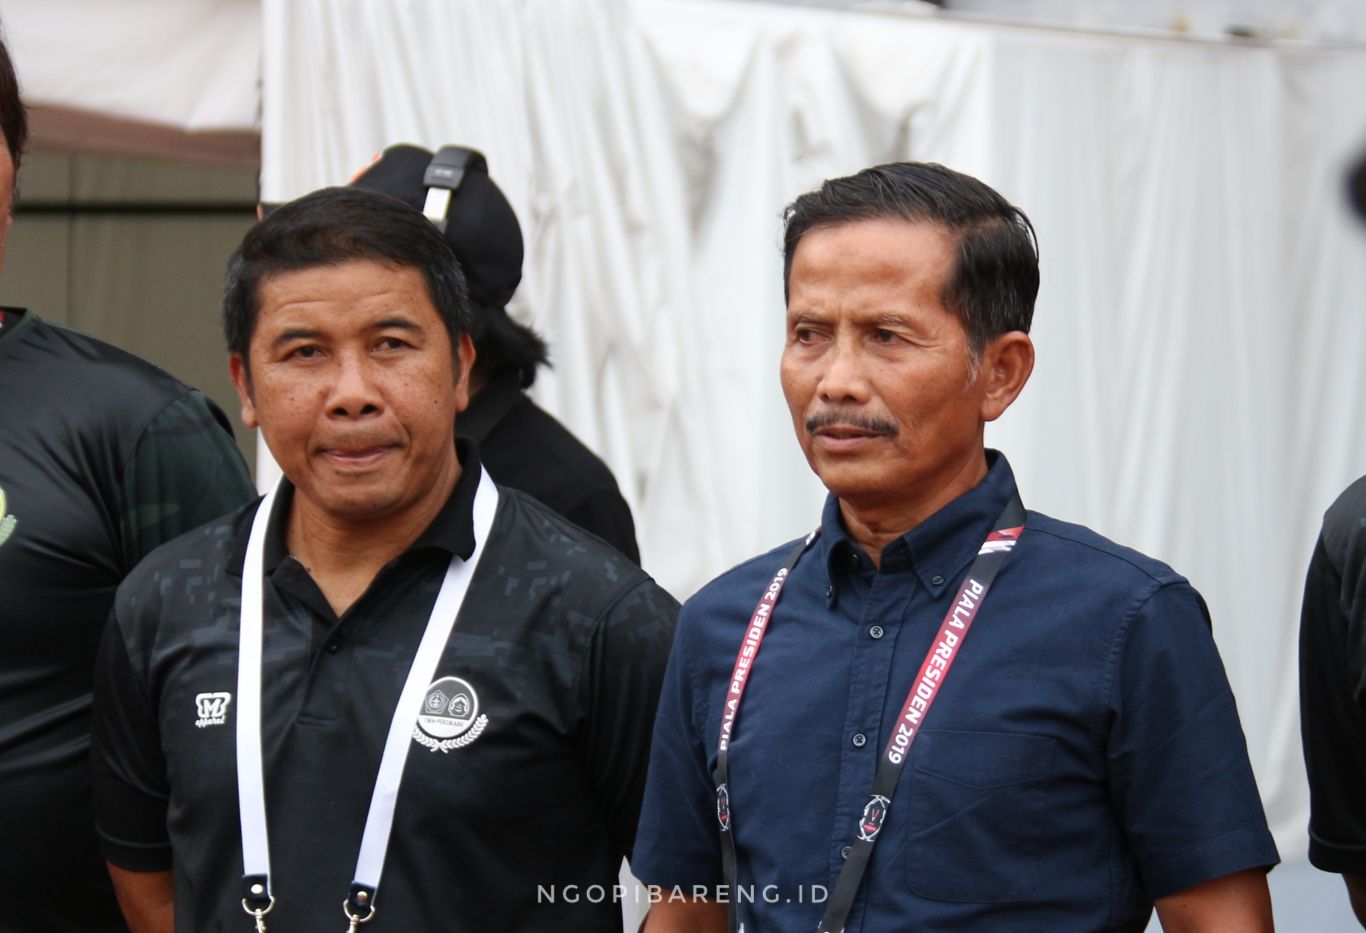 Pelatih Persebaya Djajang Nurdjaman. (Foto: Haris/ngopibareng.id)